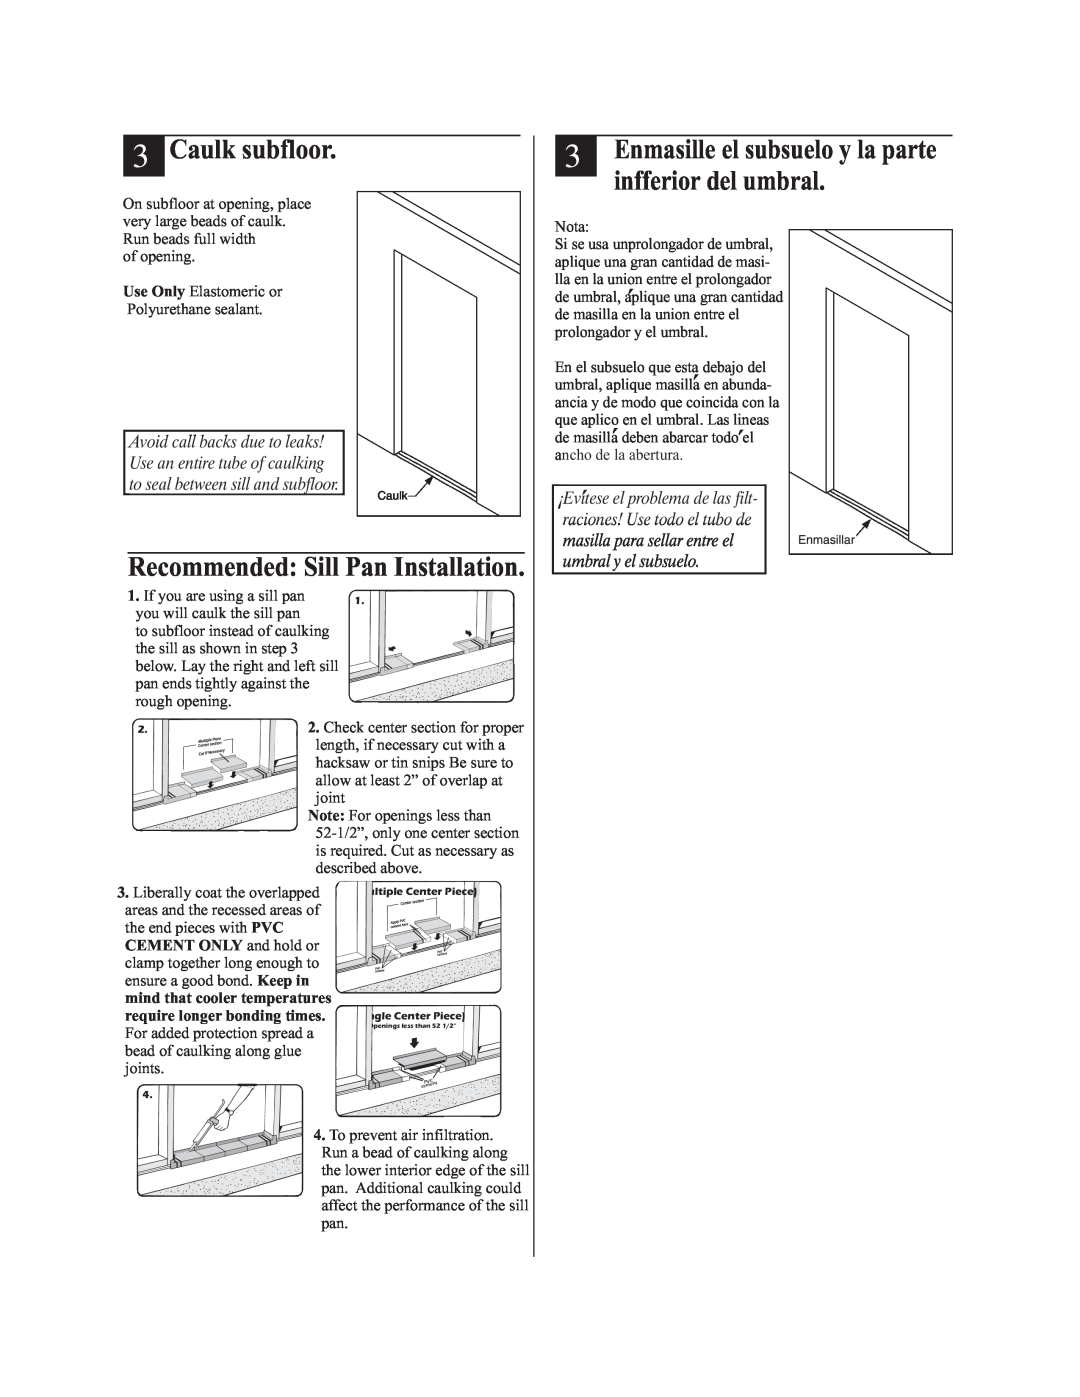 Therma-Tru Pre-hung Door Systems Caulk subfloor, Recommended Sill Pan Installation, Evitese el problema de las filt 